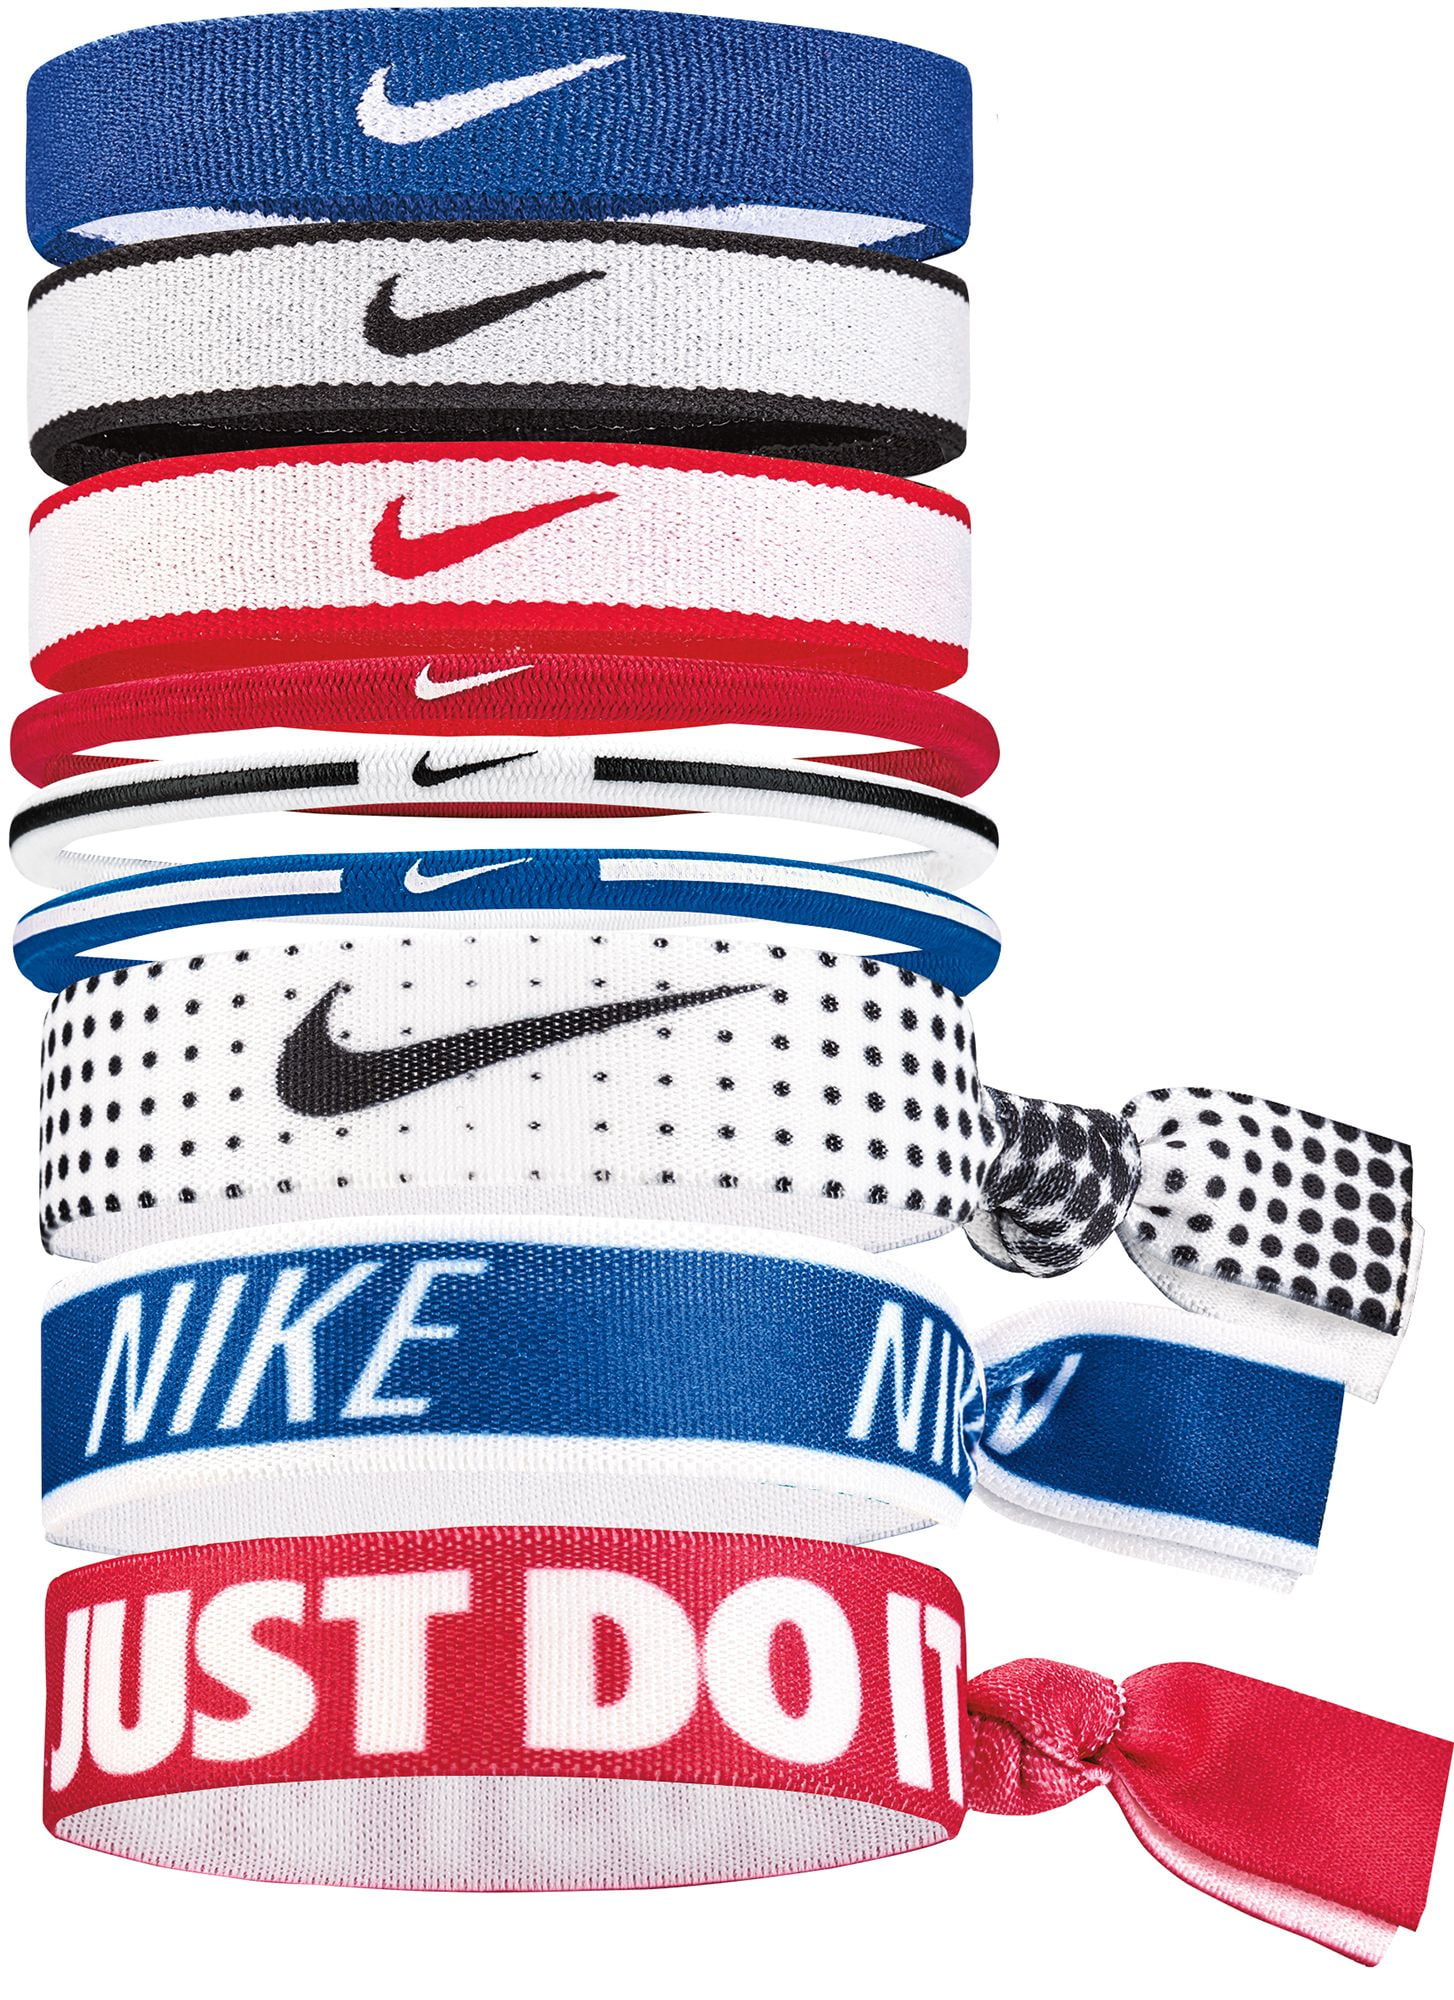 Nike Mixed Ponytail Holder 9 pack - Walmart.com